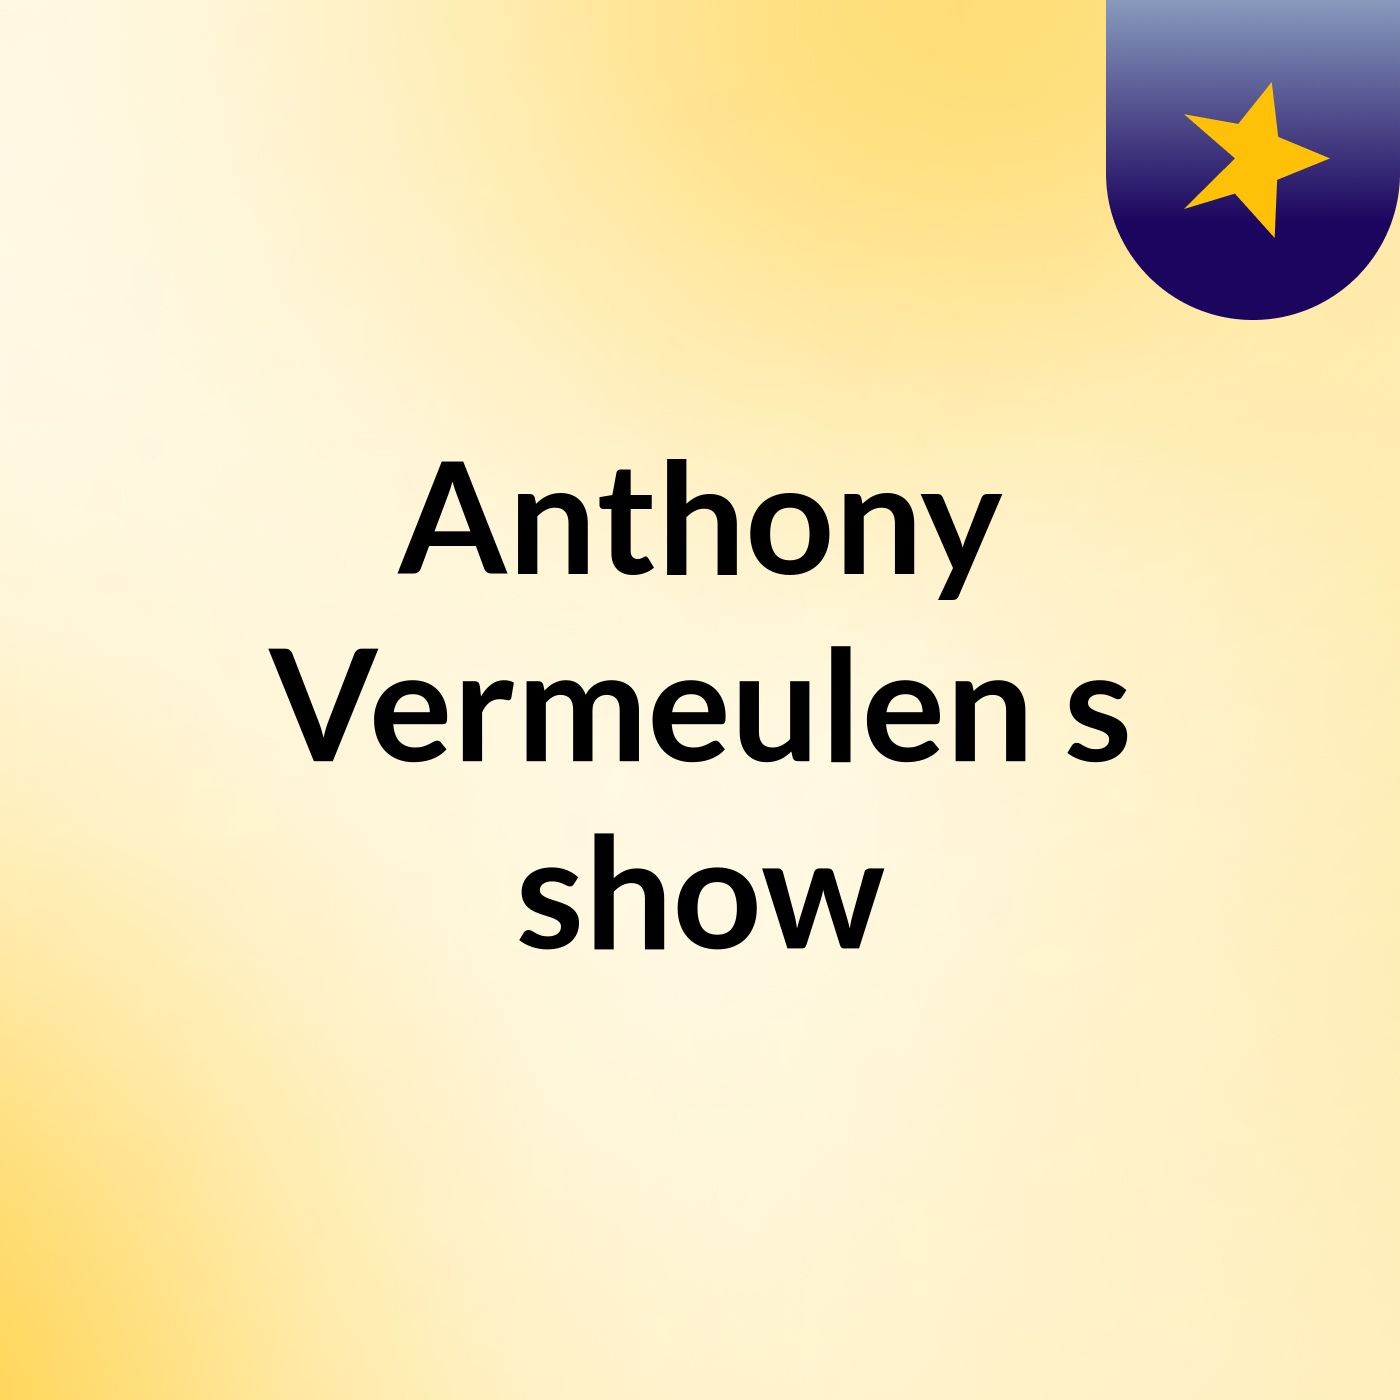 Episode 4 - Anthony Vermeulen's show